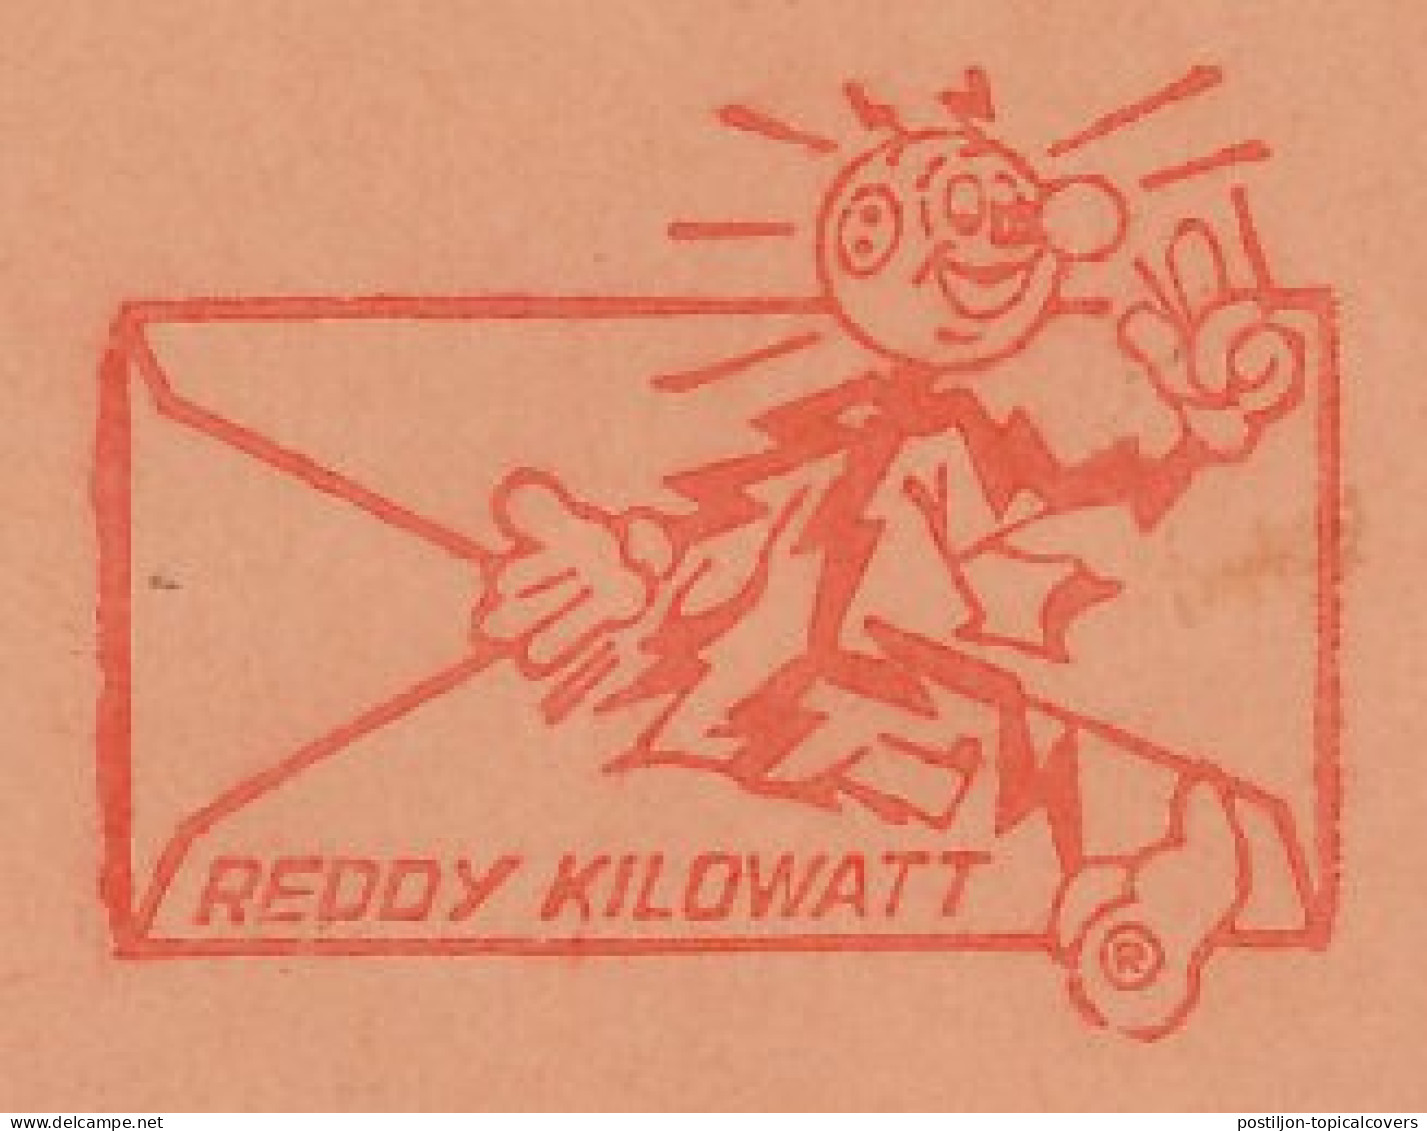 Meter Cut Belgium 1986 Reddy Kilowatt - Elektrizität